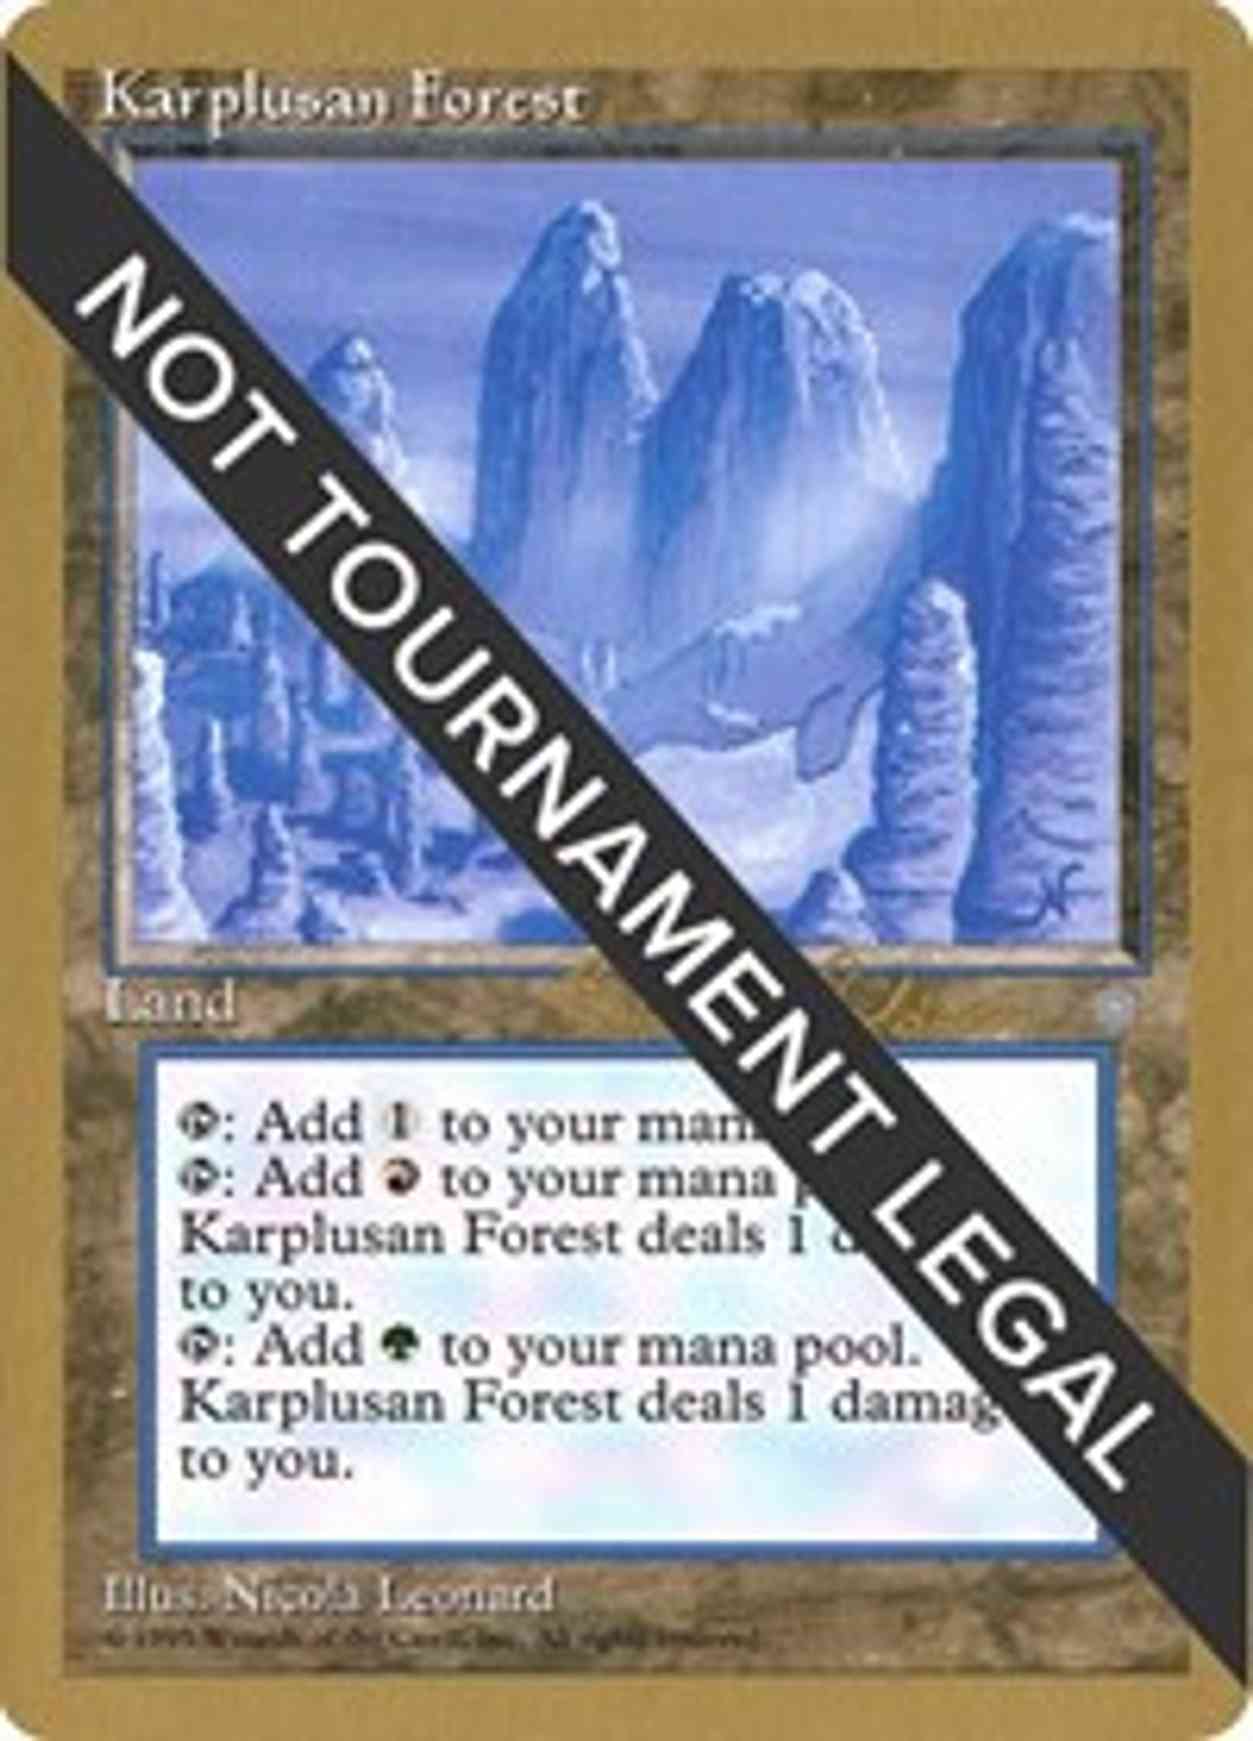 Karplusan Forest - 1998 Brian Selden (ICE) magic card front